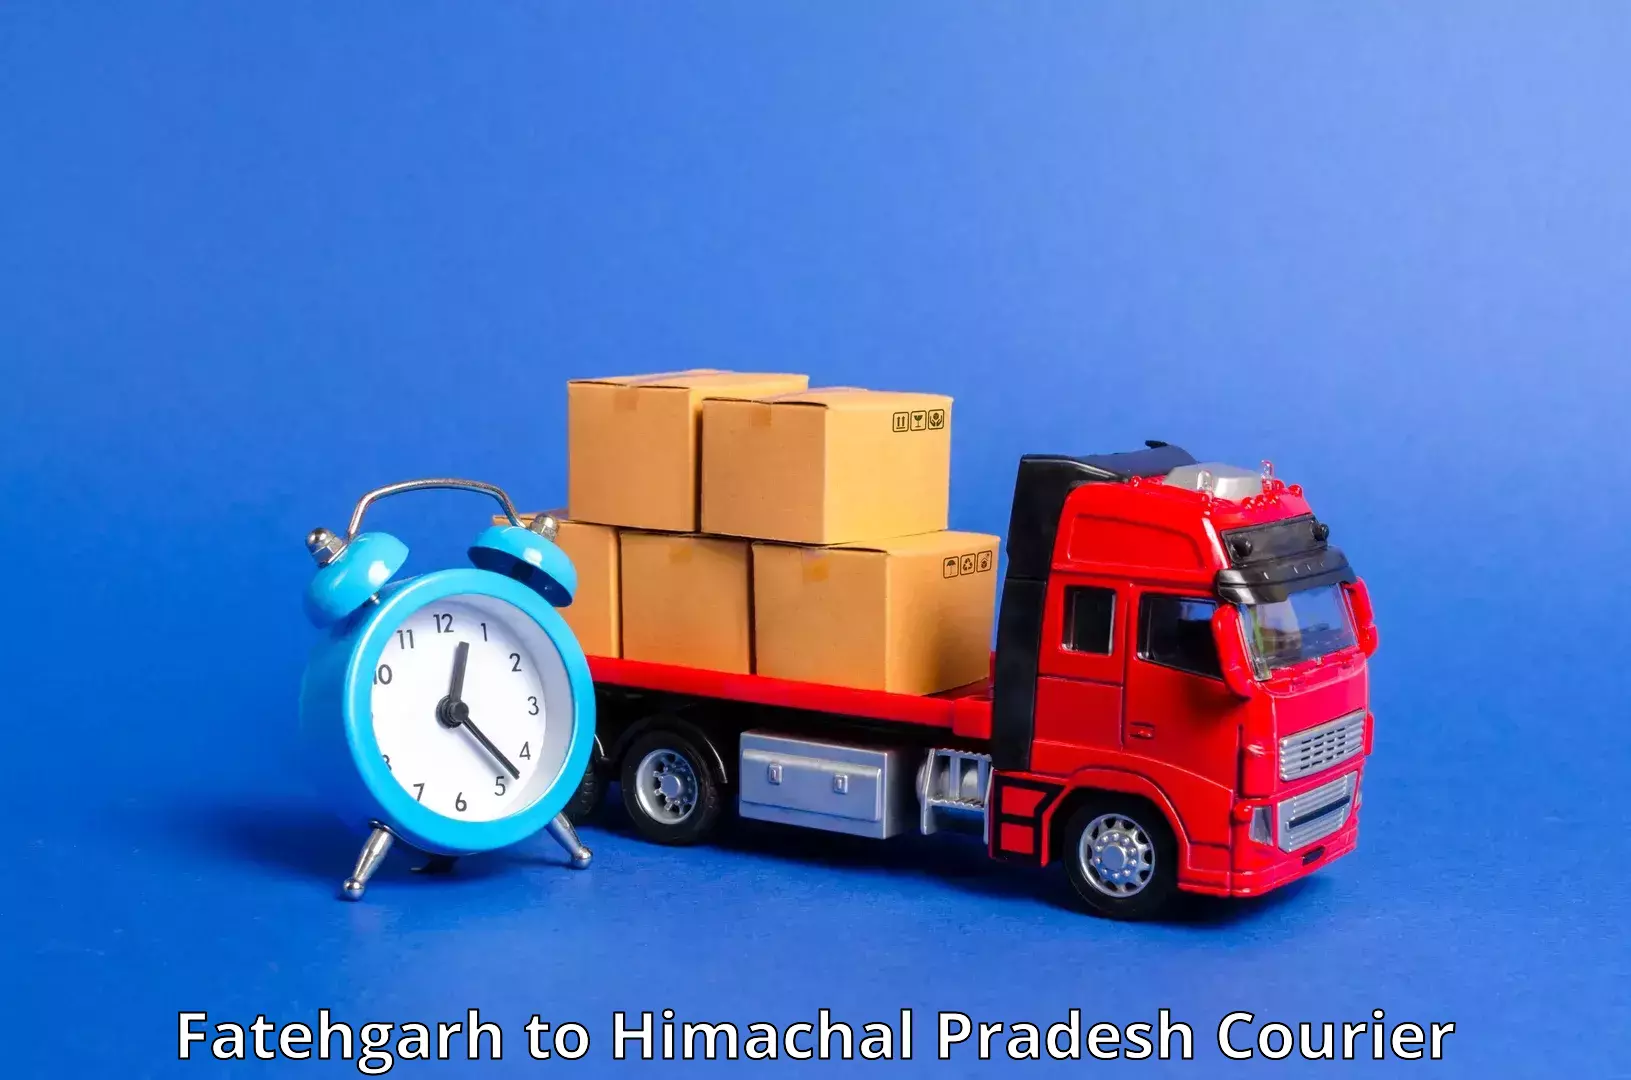 Express package handling in Fatehgarh to Dharamshala